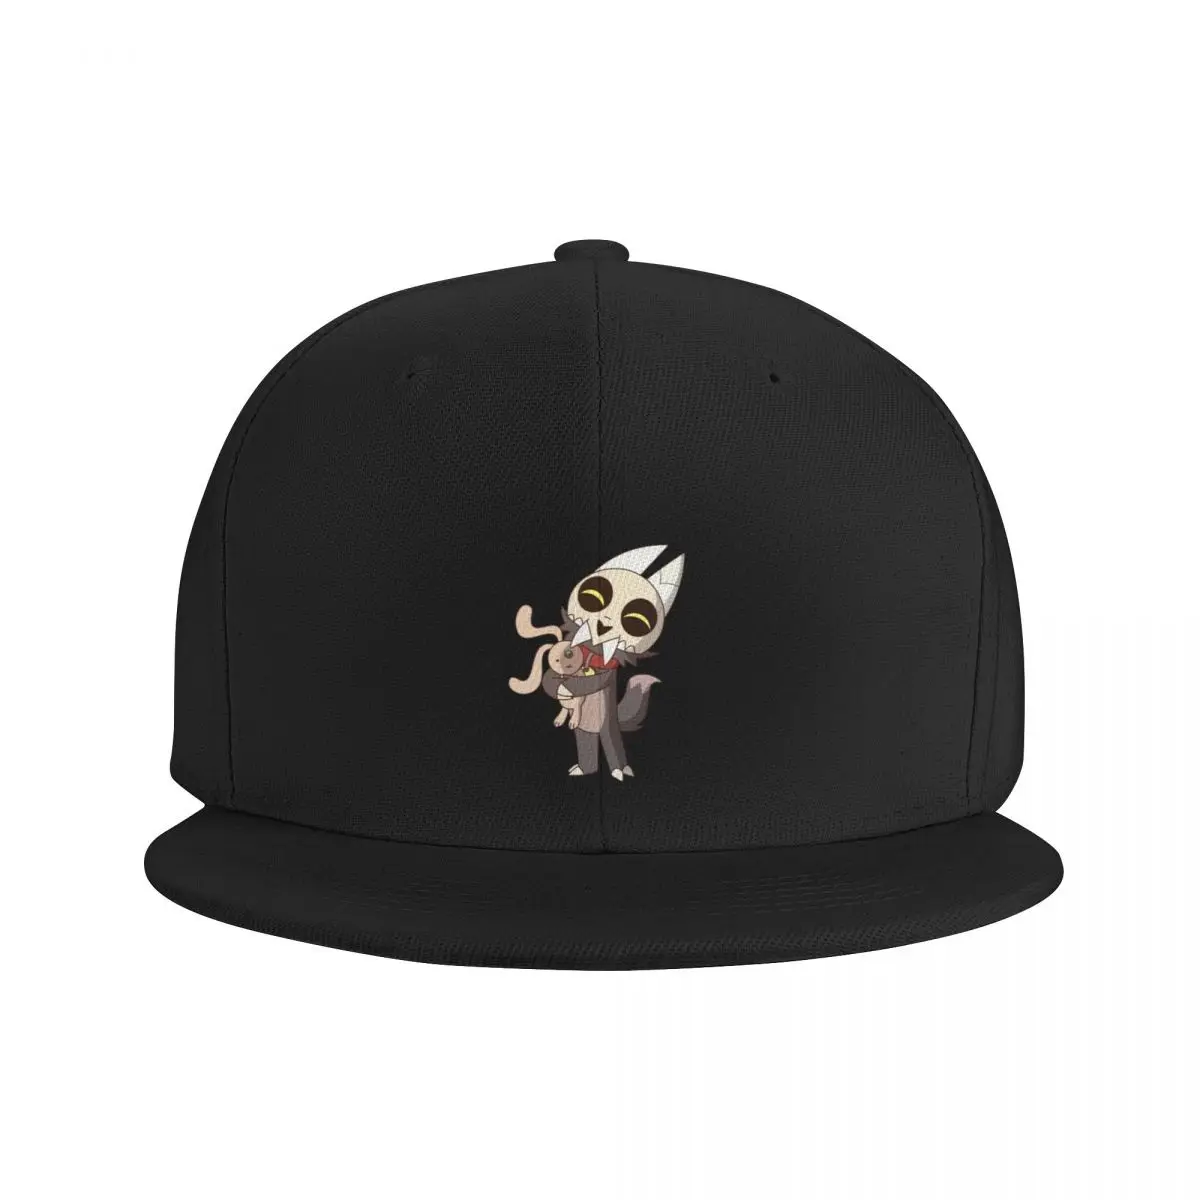 Бейсболка King | The Owl House с защитой от ультрафиолета, солнечная шляпа, роскошная мужская шляпа, кепка на заказ, женская шляпа, мужская